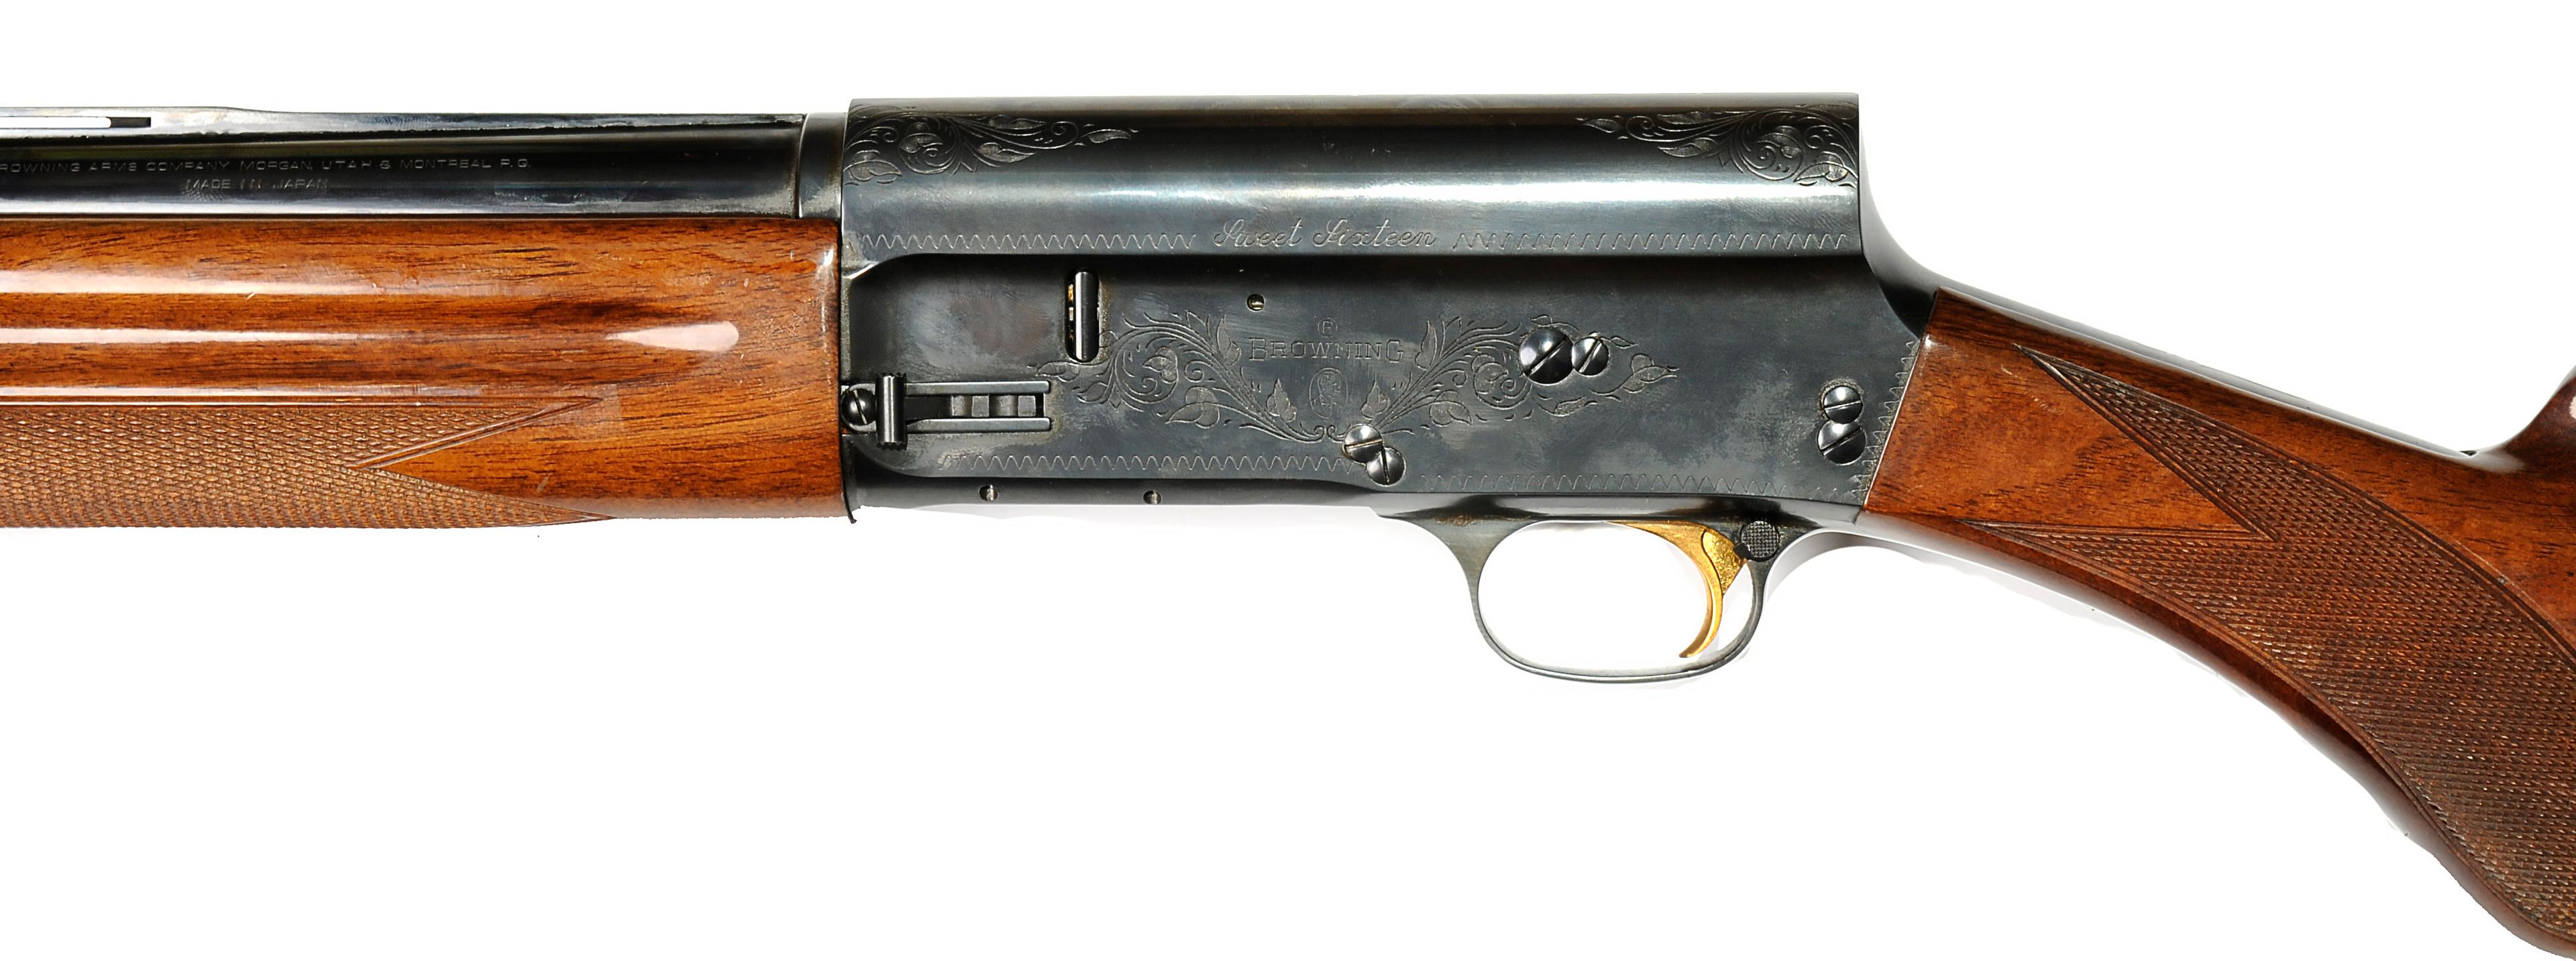 Browning A5 Sweet Sixteen Semi-Automatic 16 Ga Shotgun FFL: 43171PR221 (PAG 1)